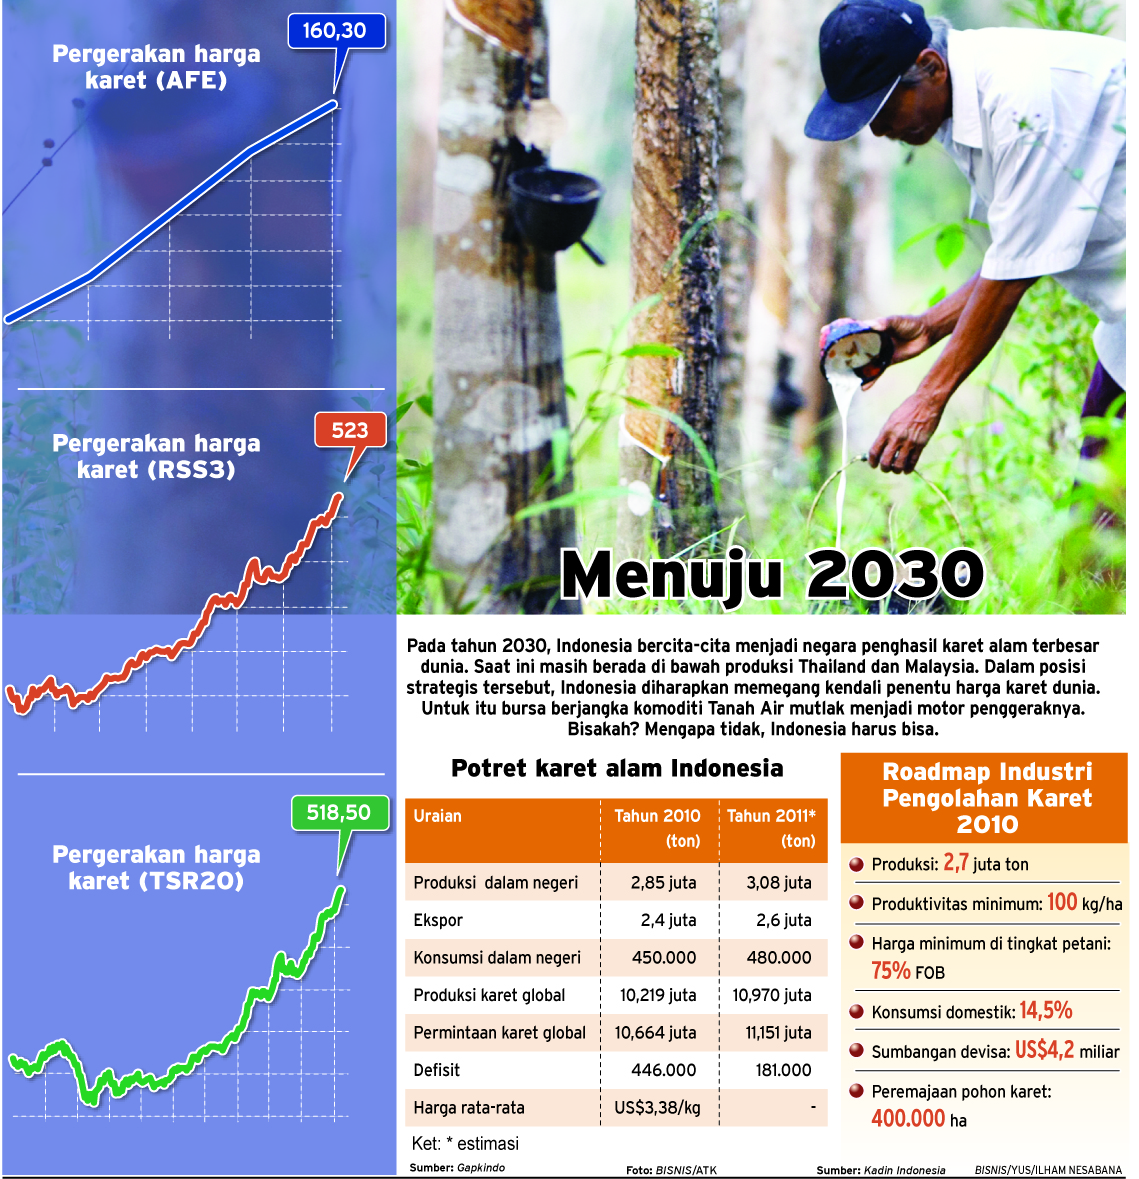 Nort Sumatra's Rubber Exports up 15.04 Pct